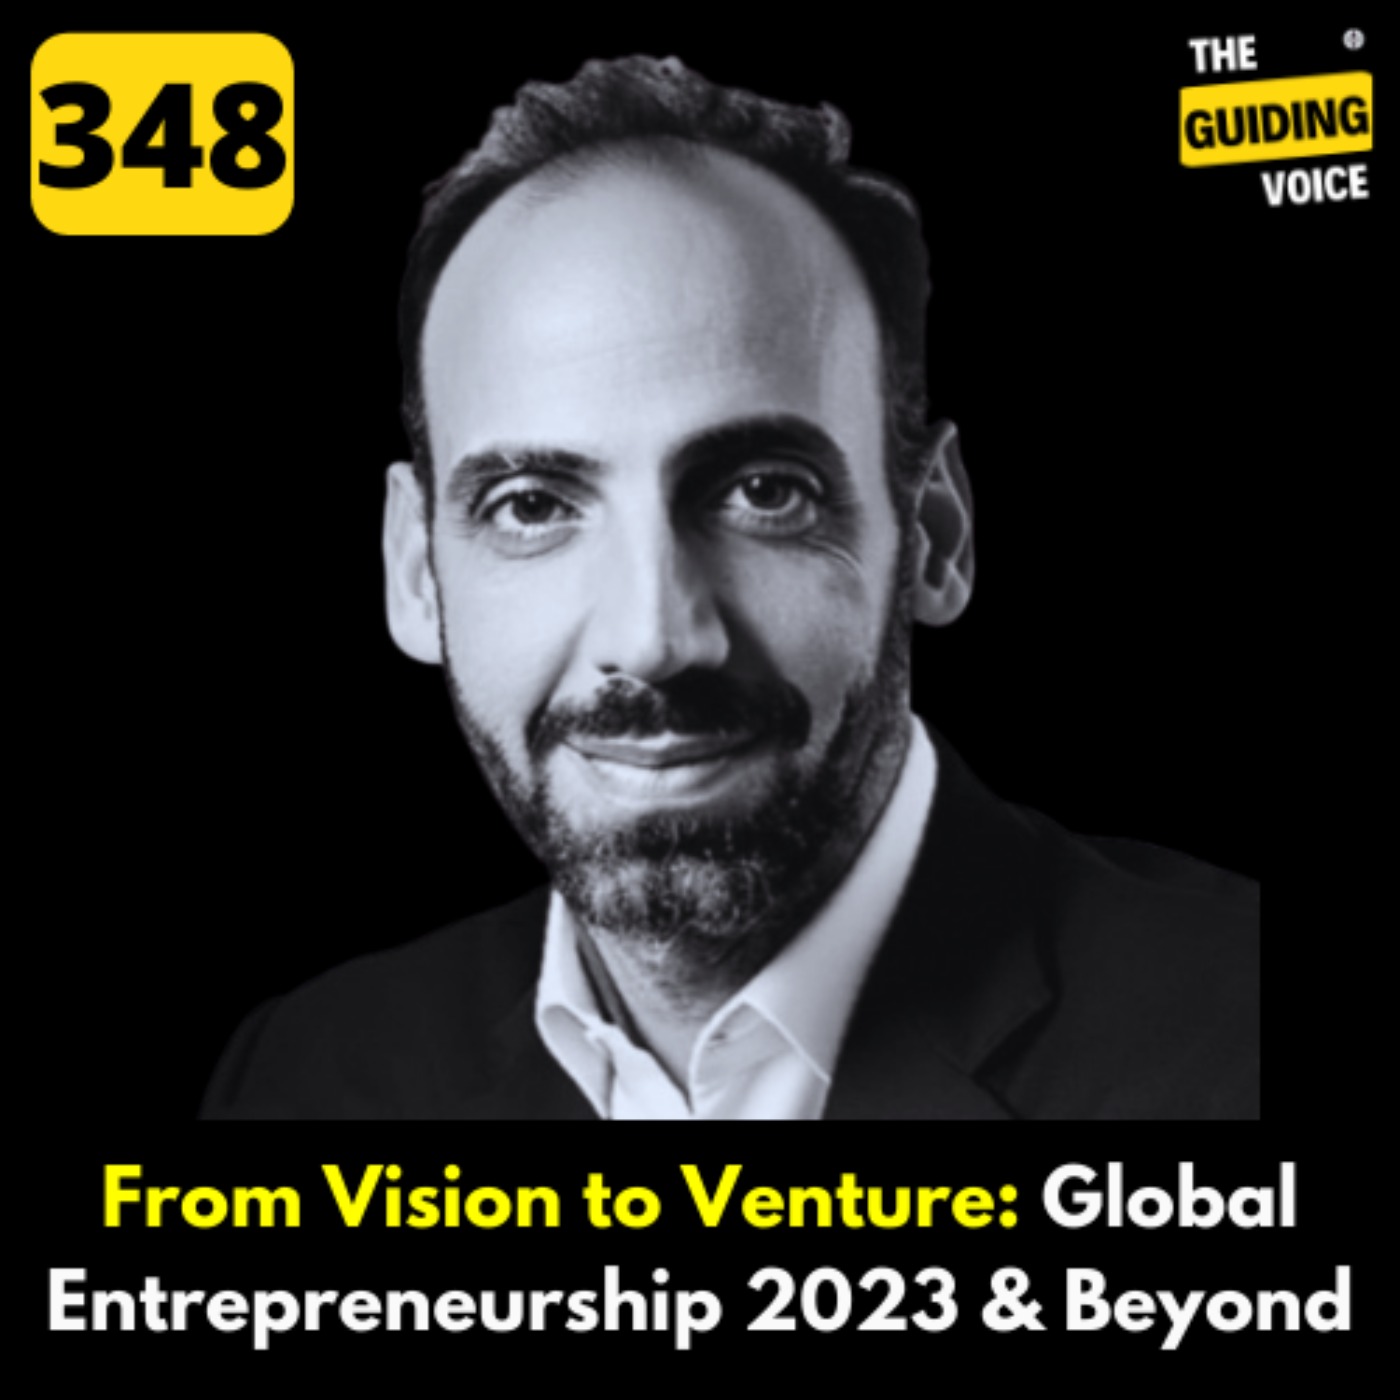 From Vision to Venture: GLOBAL ENTREPRENEURSHIP 2023 AND BEYOND | FOUAD SADER | #TGV348